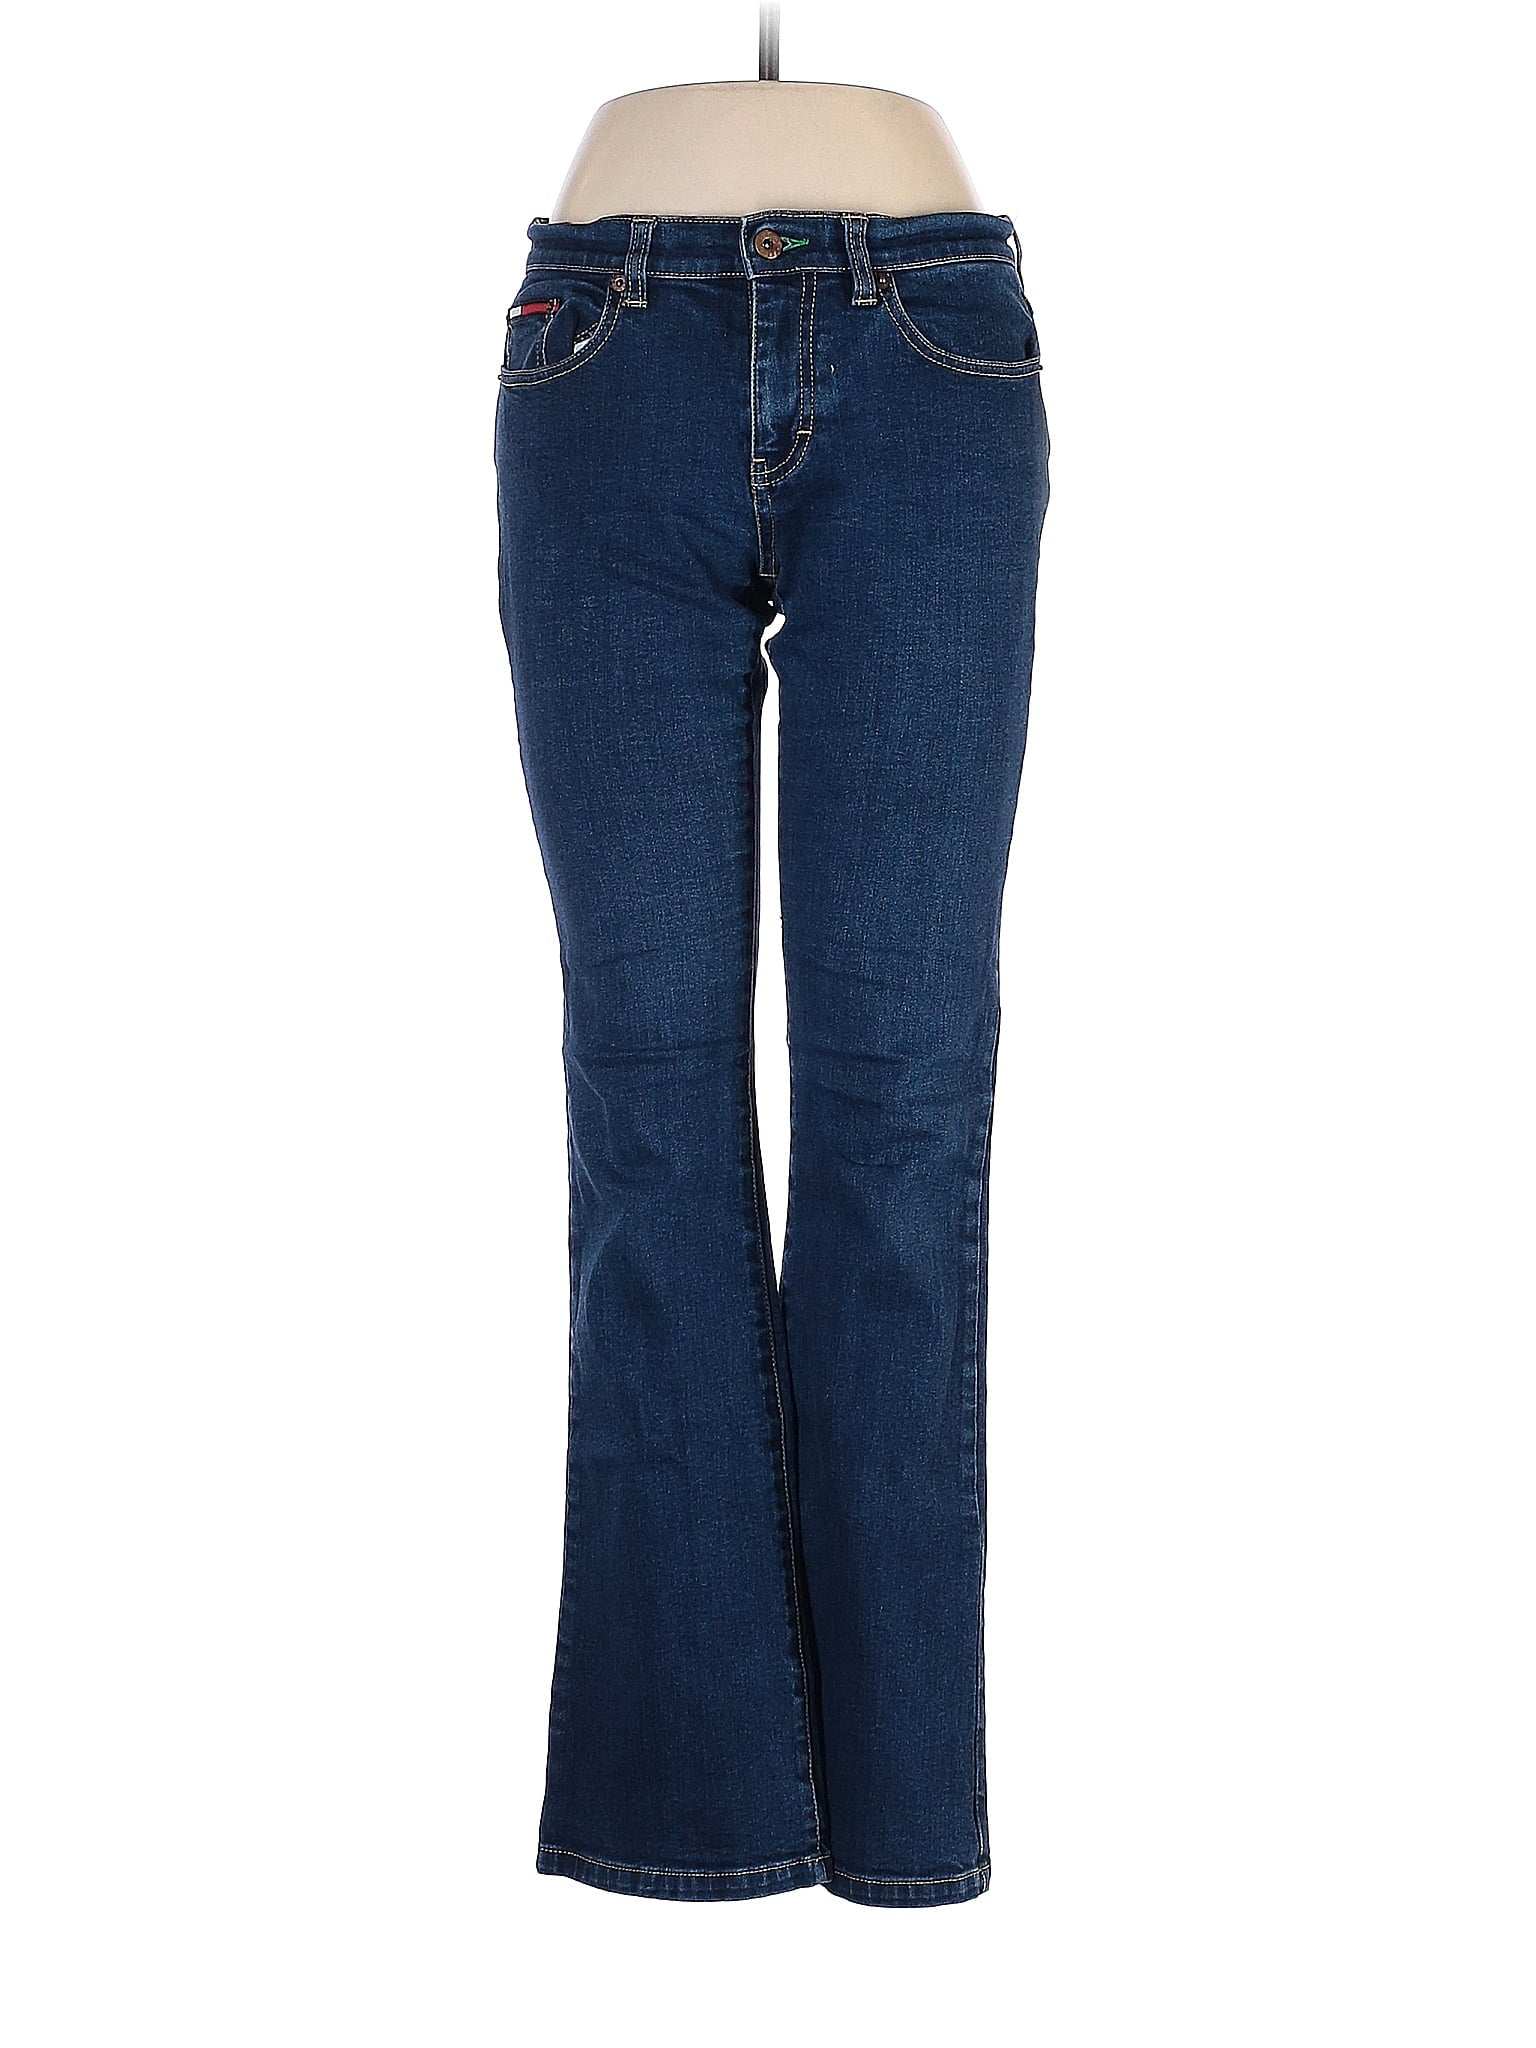 Jeans size - 7